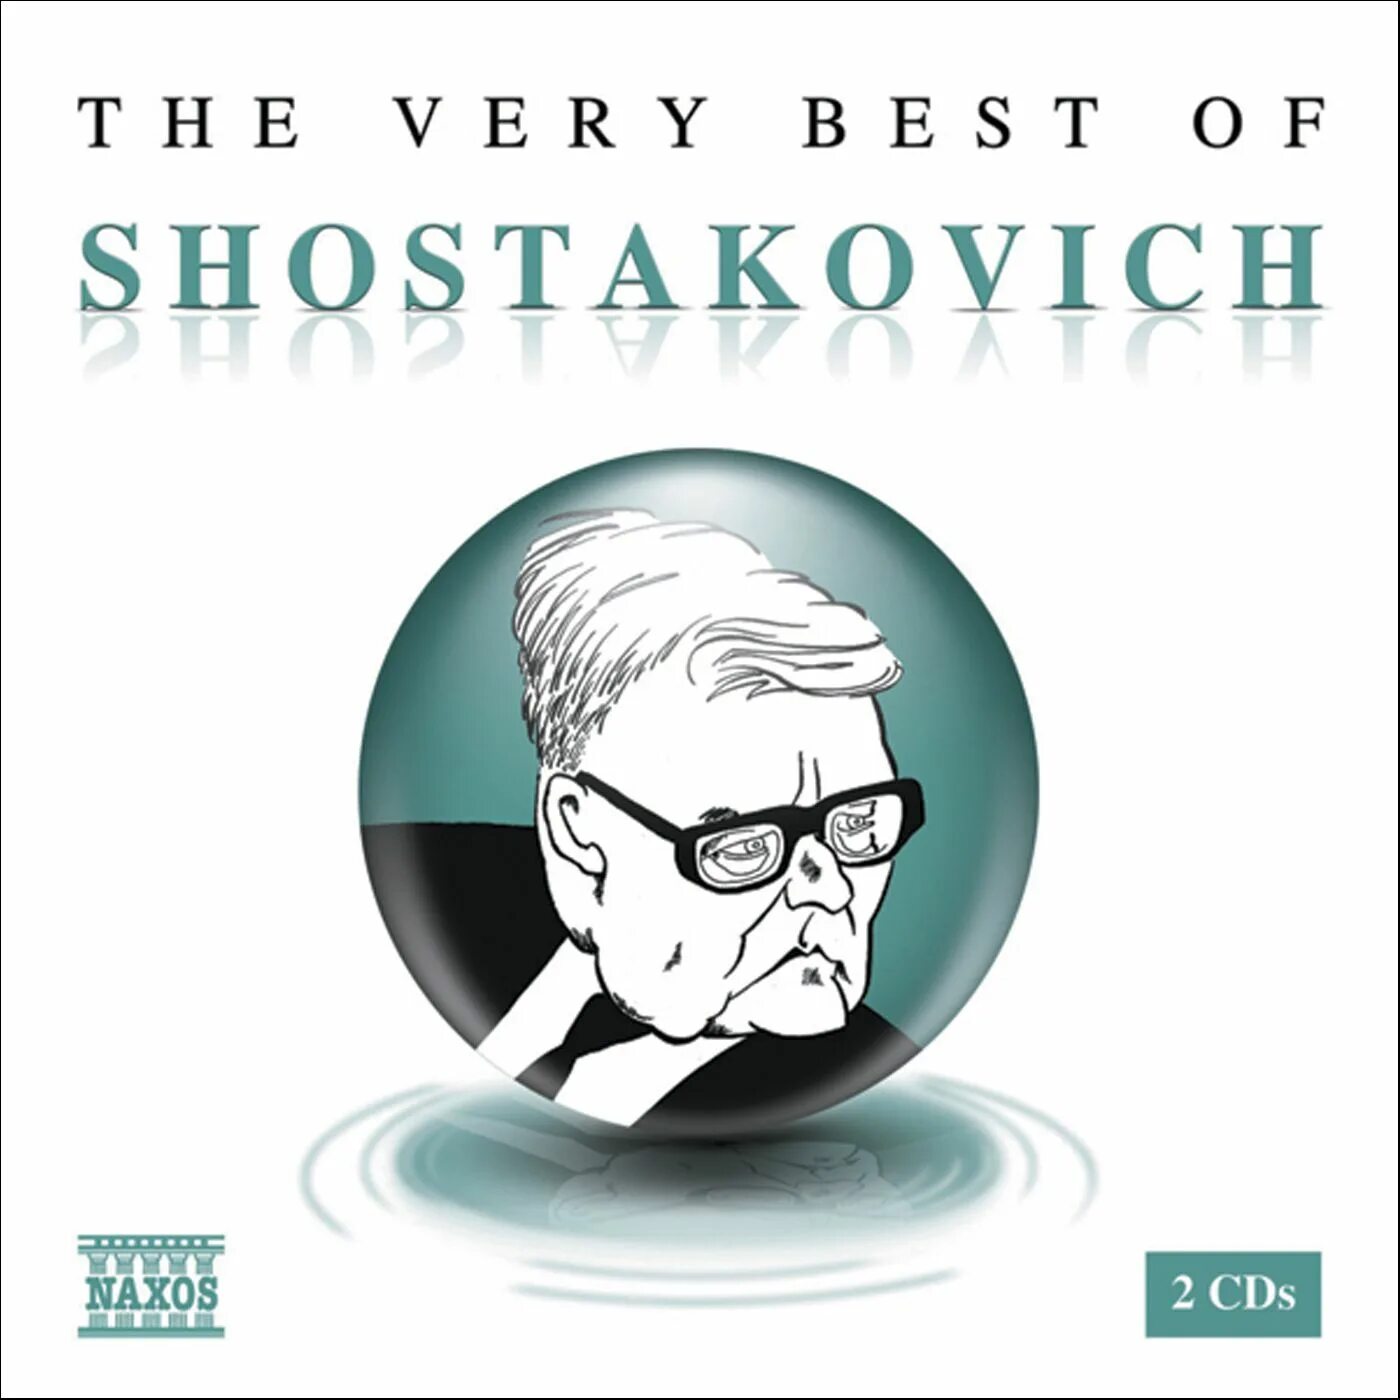 Шостакович портрет композитора. Dmitri Shostakovich Symphony no 1. Dmitri Shostakovich the very best of Naxos обложки.